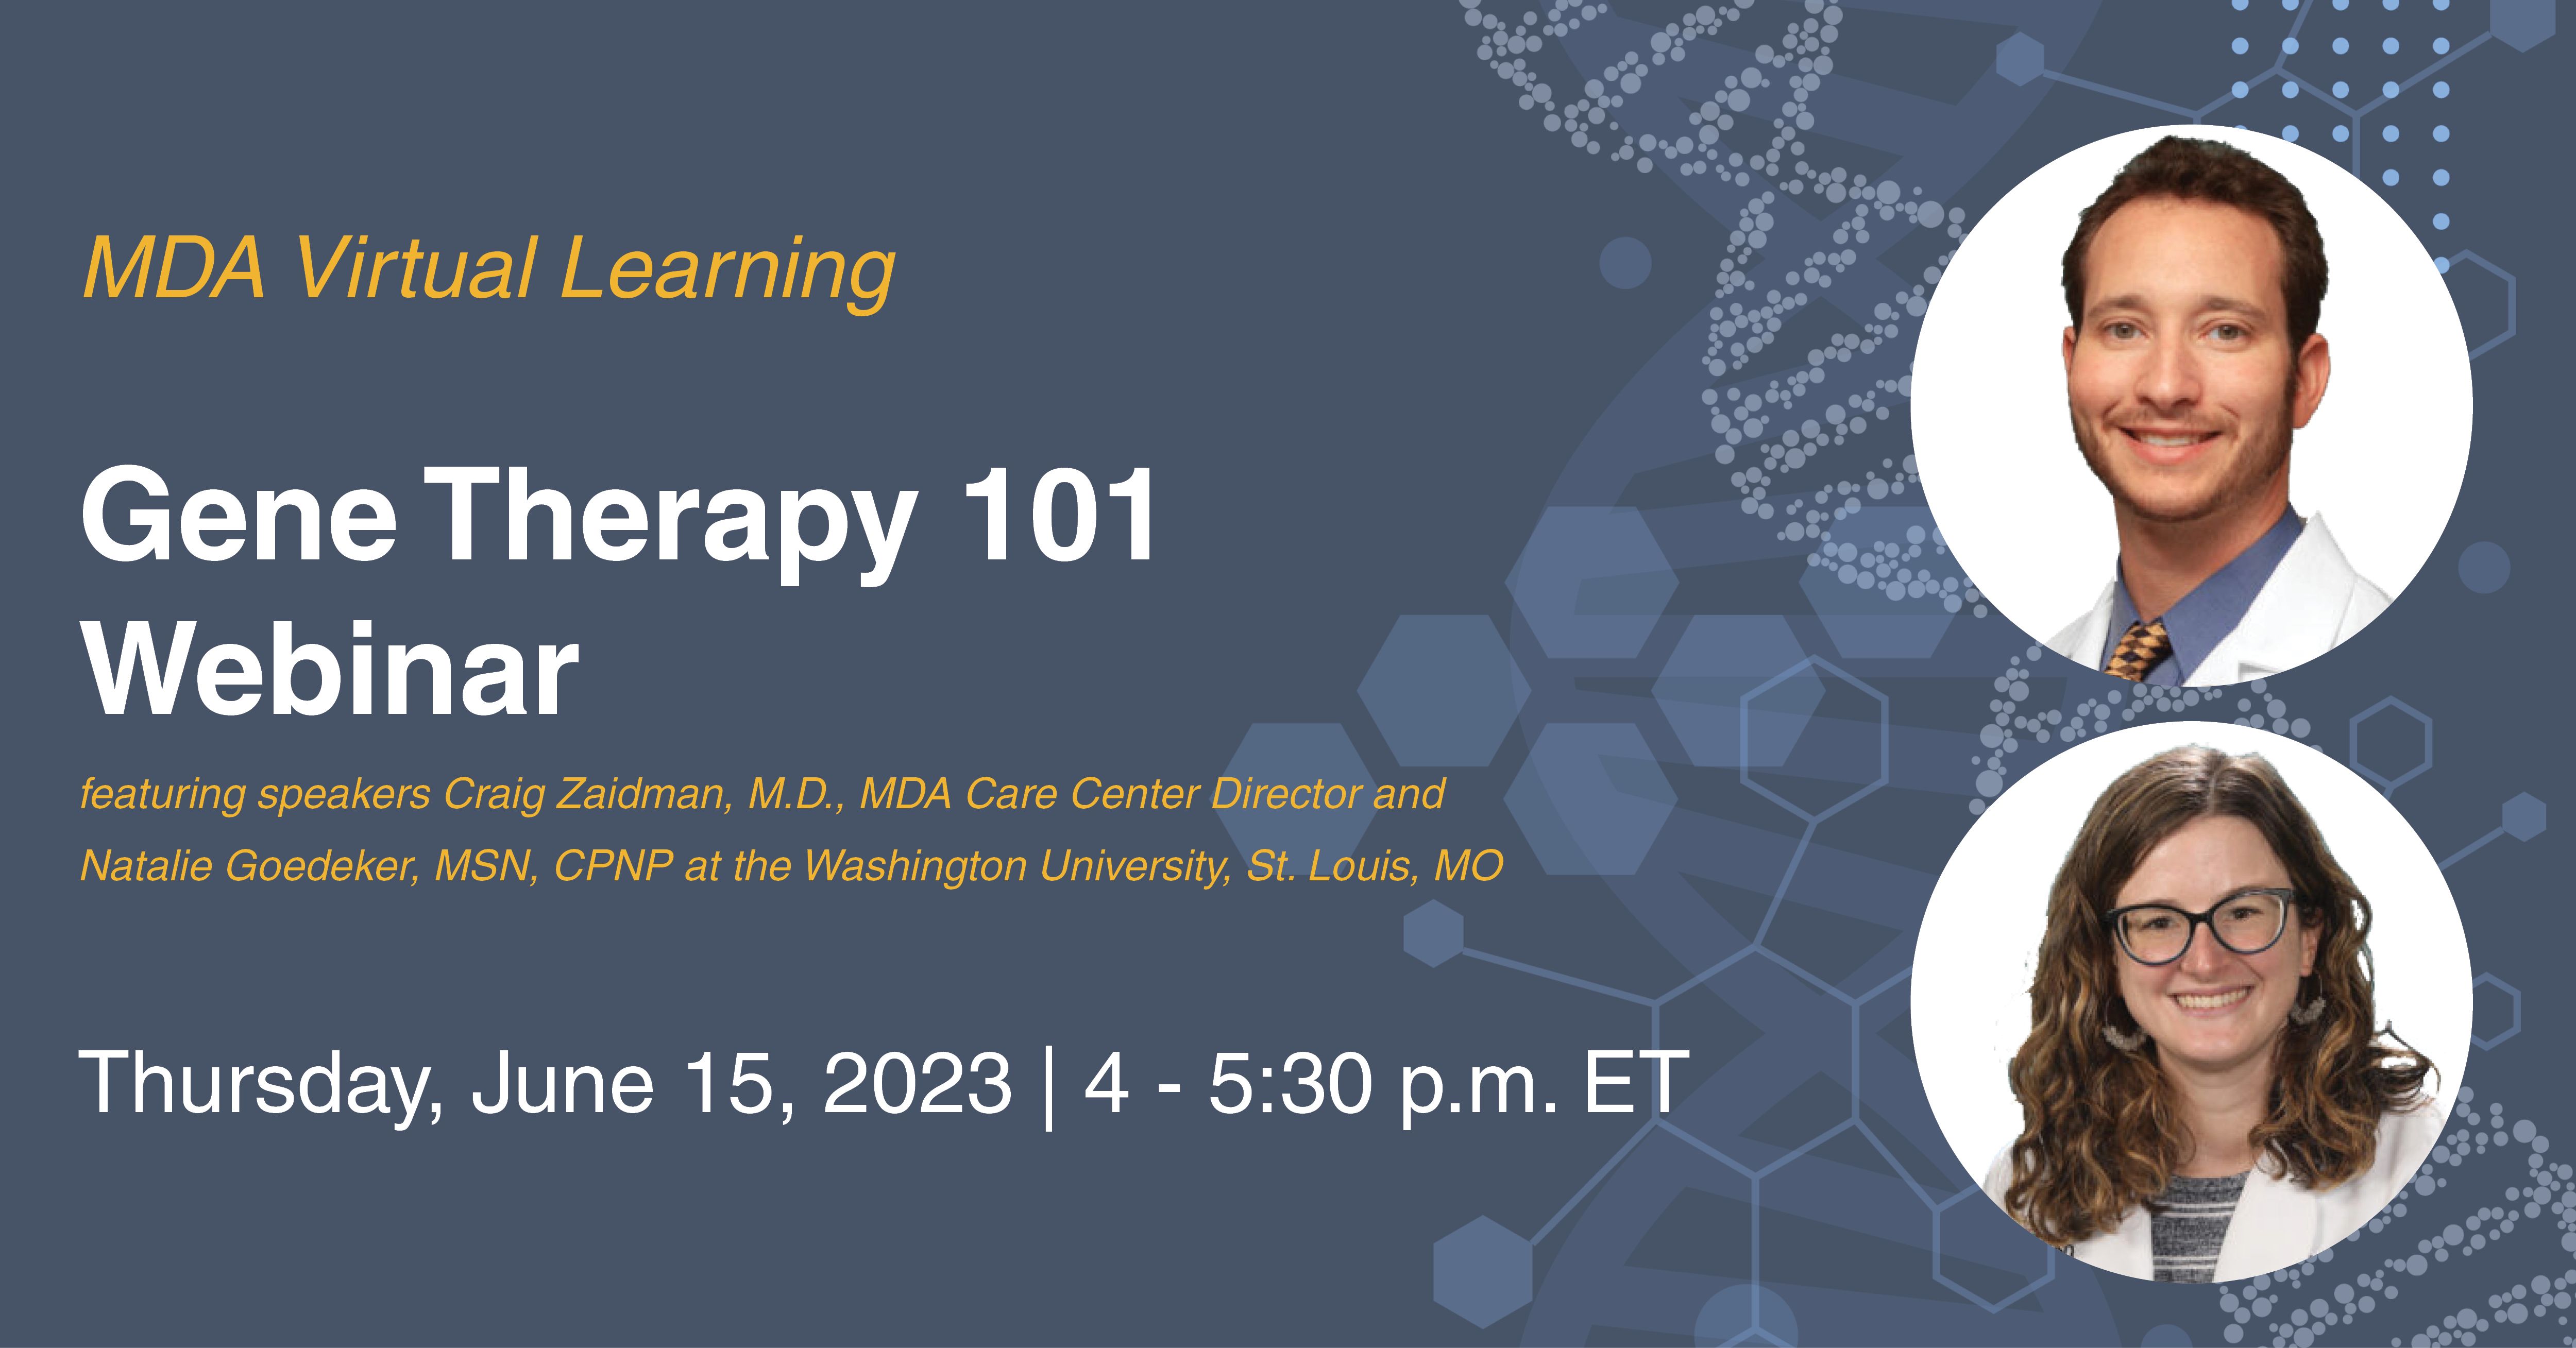 MDA Virtual Learning: Gene Therapy 101 Webinar